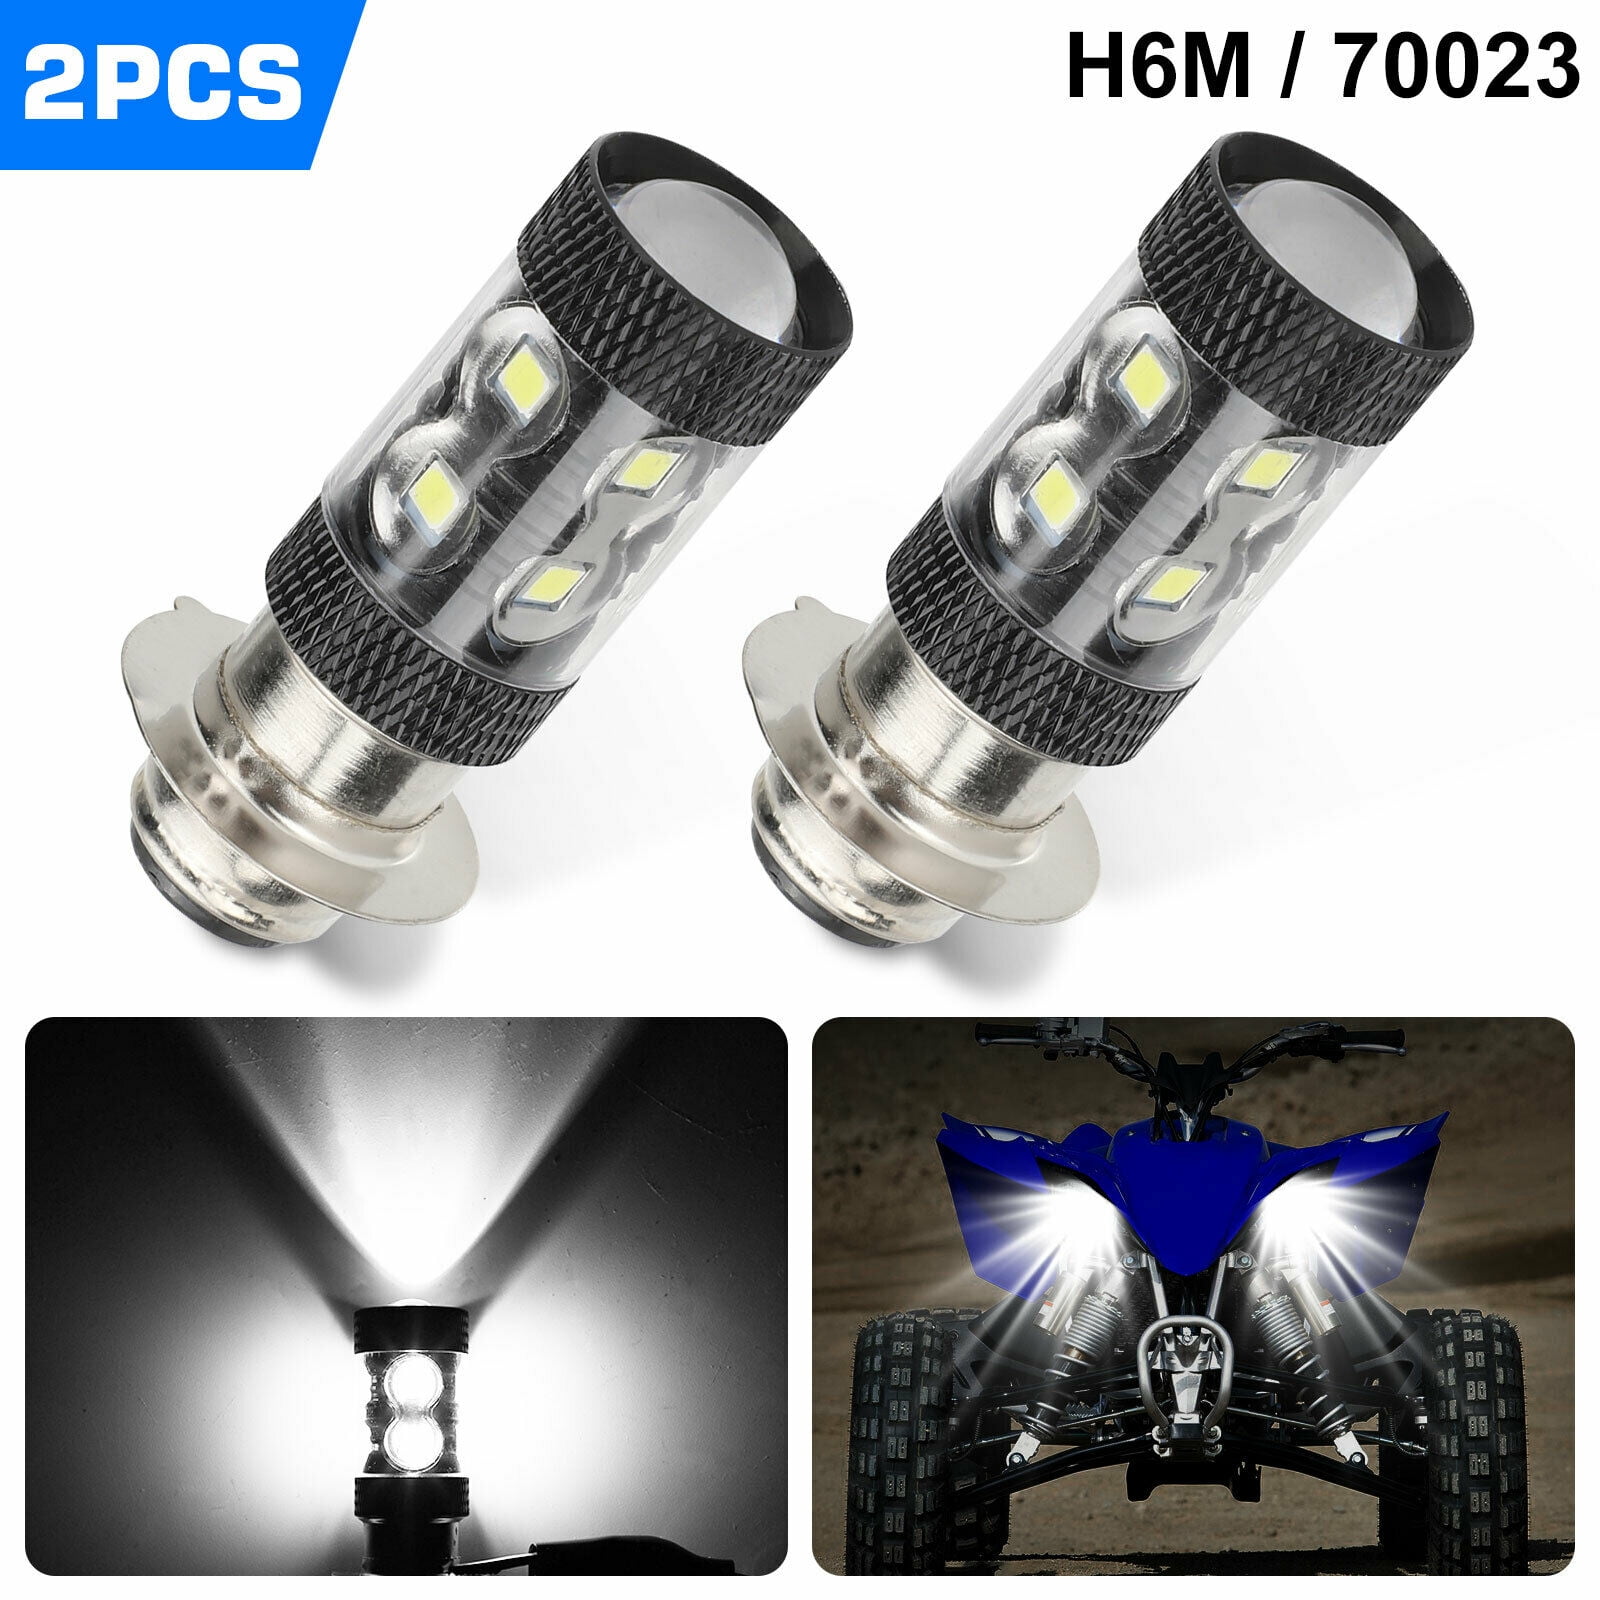 2Pcs H6 Motorcycle Bright HID White LED Headlight Light Bulbs Upgrade Fit Yamaha 